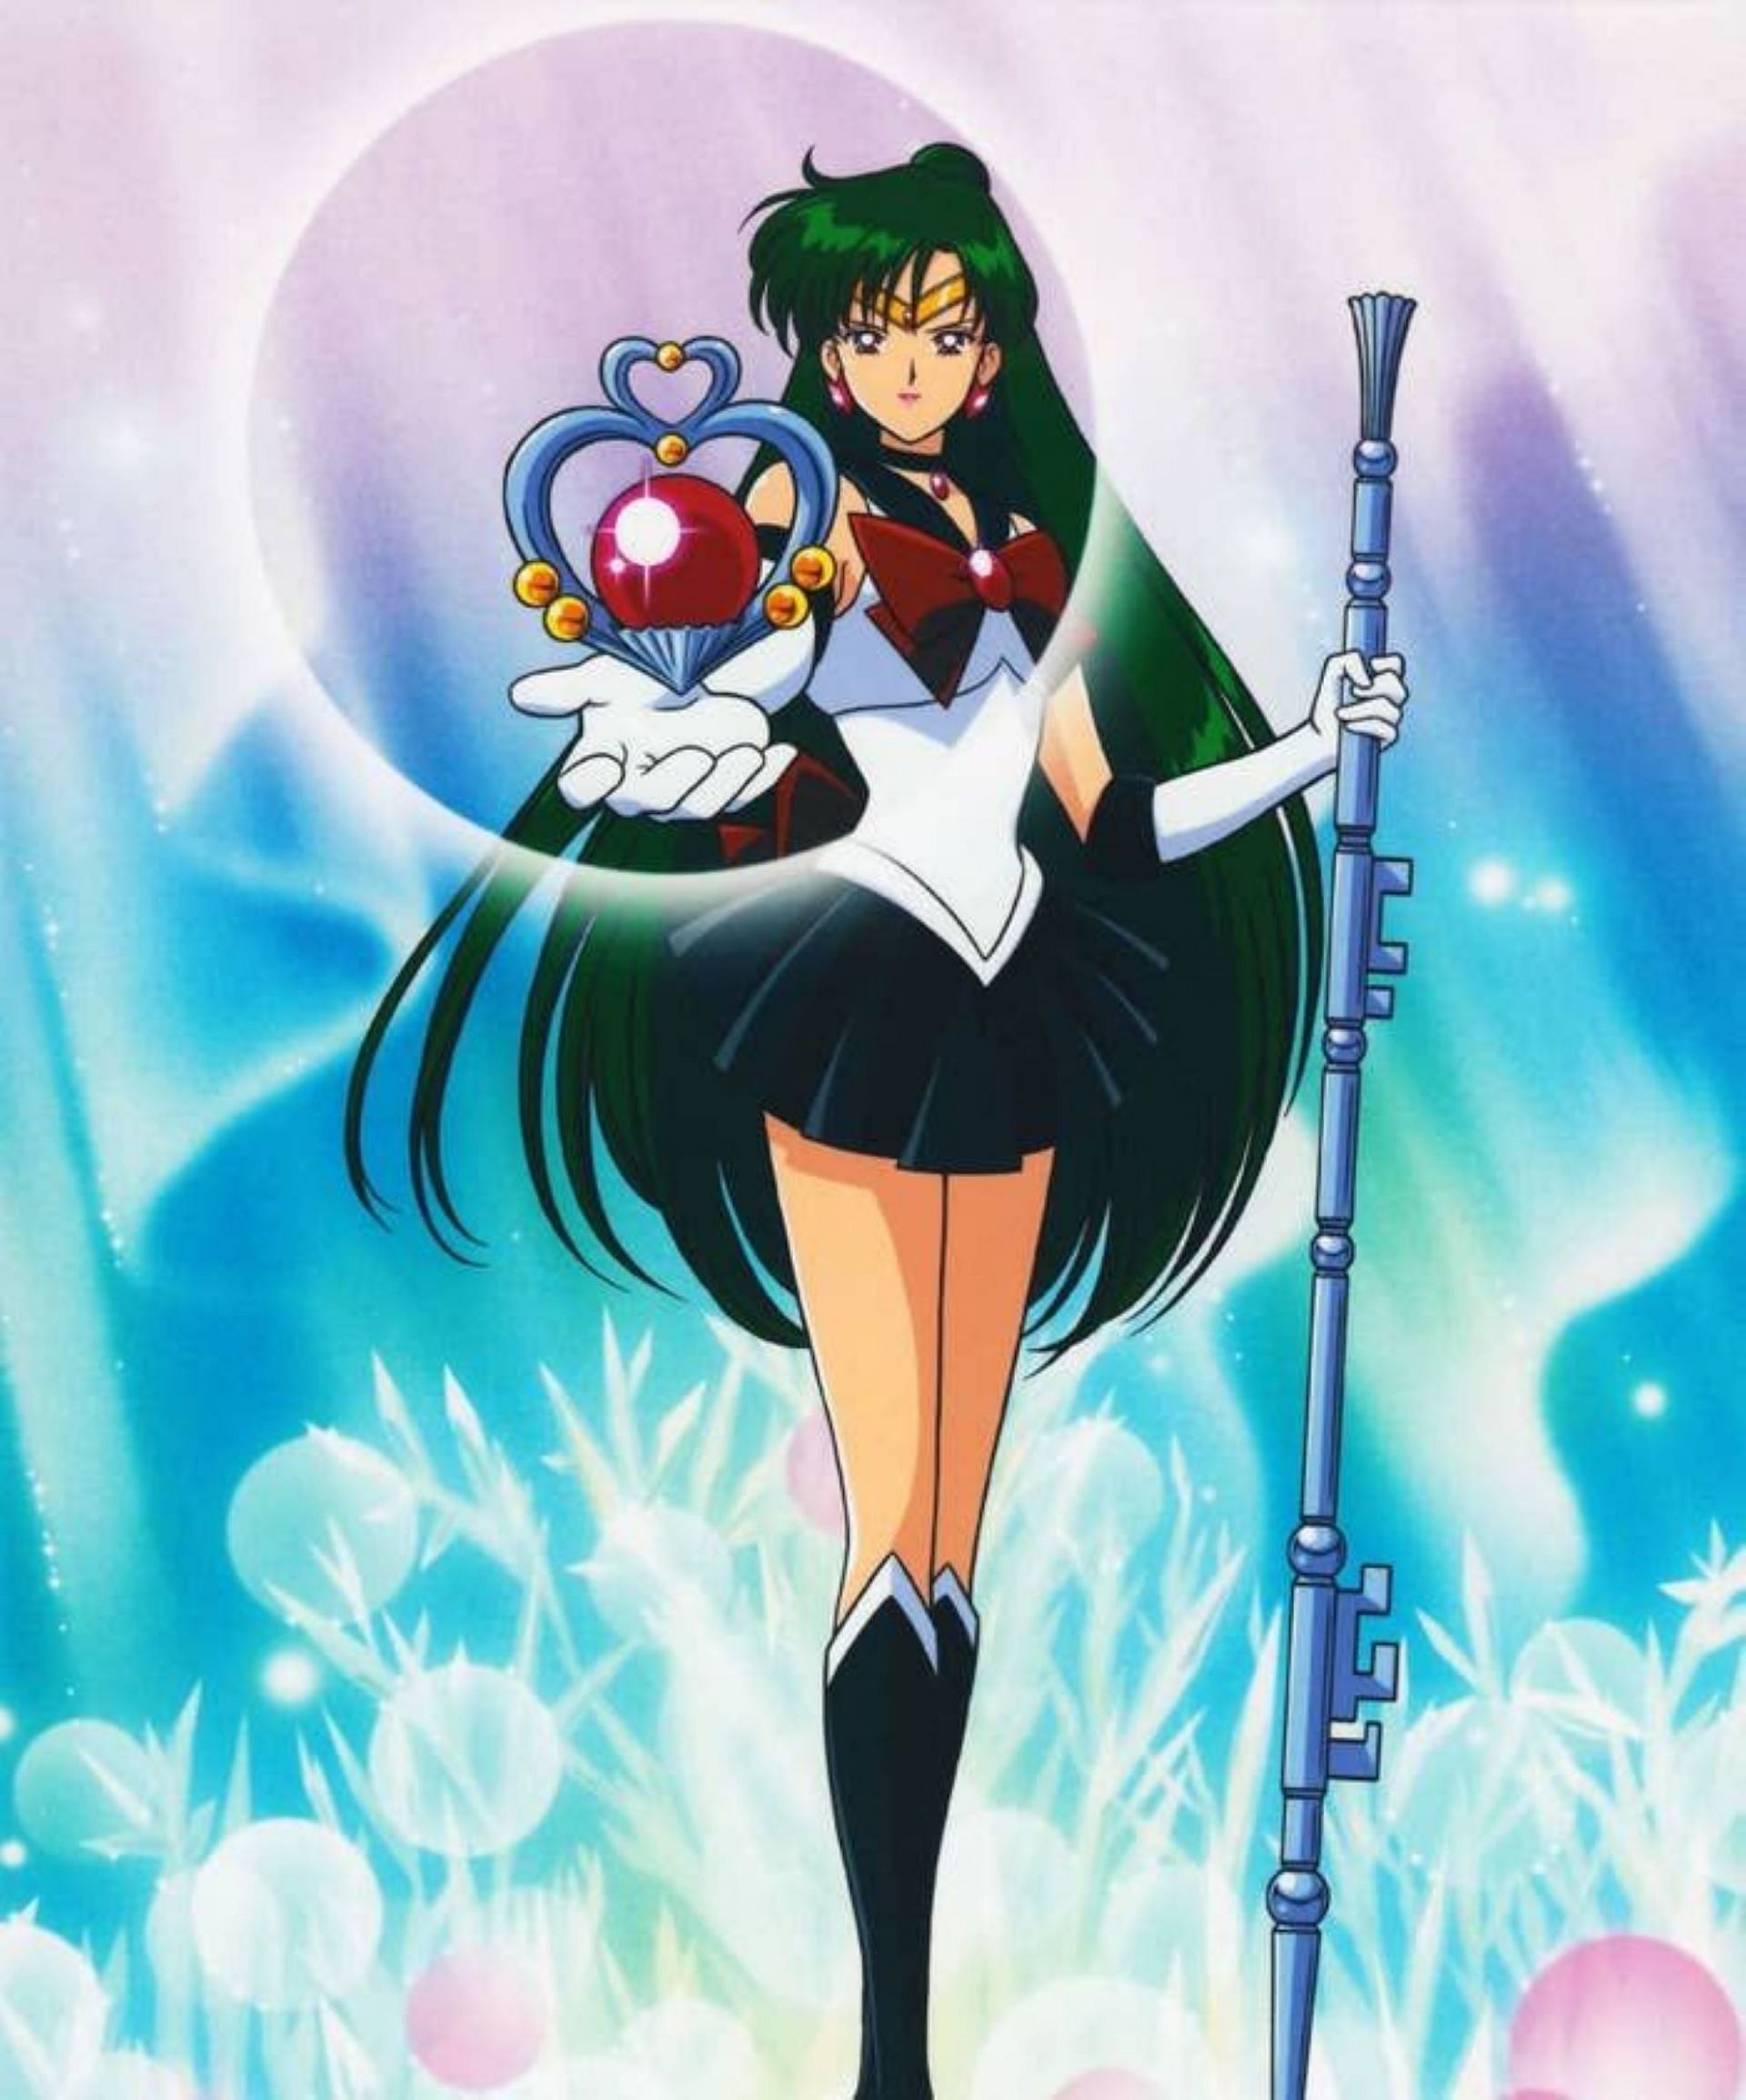 Sailor Jupiter (Image via Toei Animation)